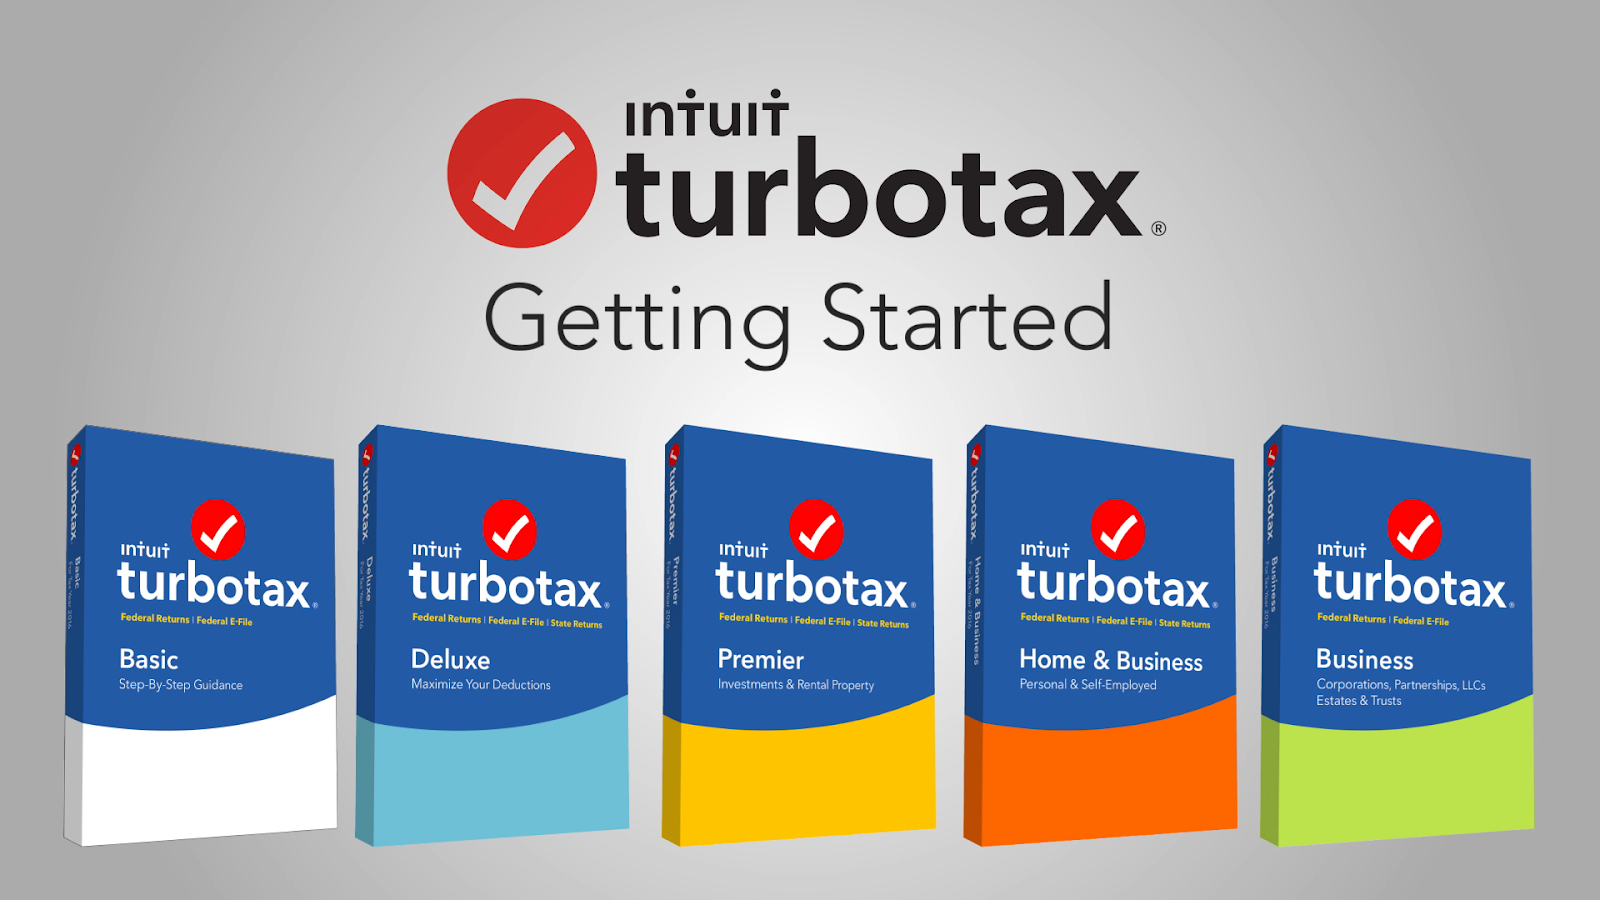 Turbotax 2020 Free Download